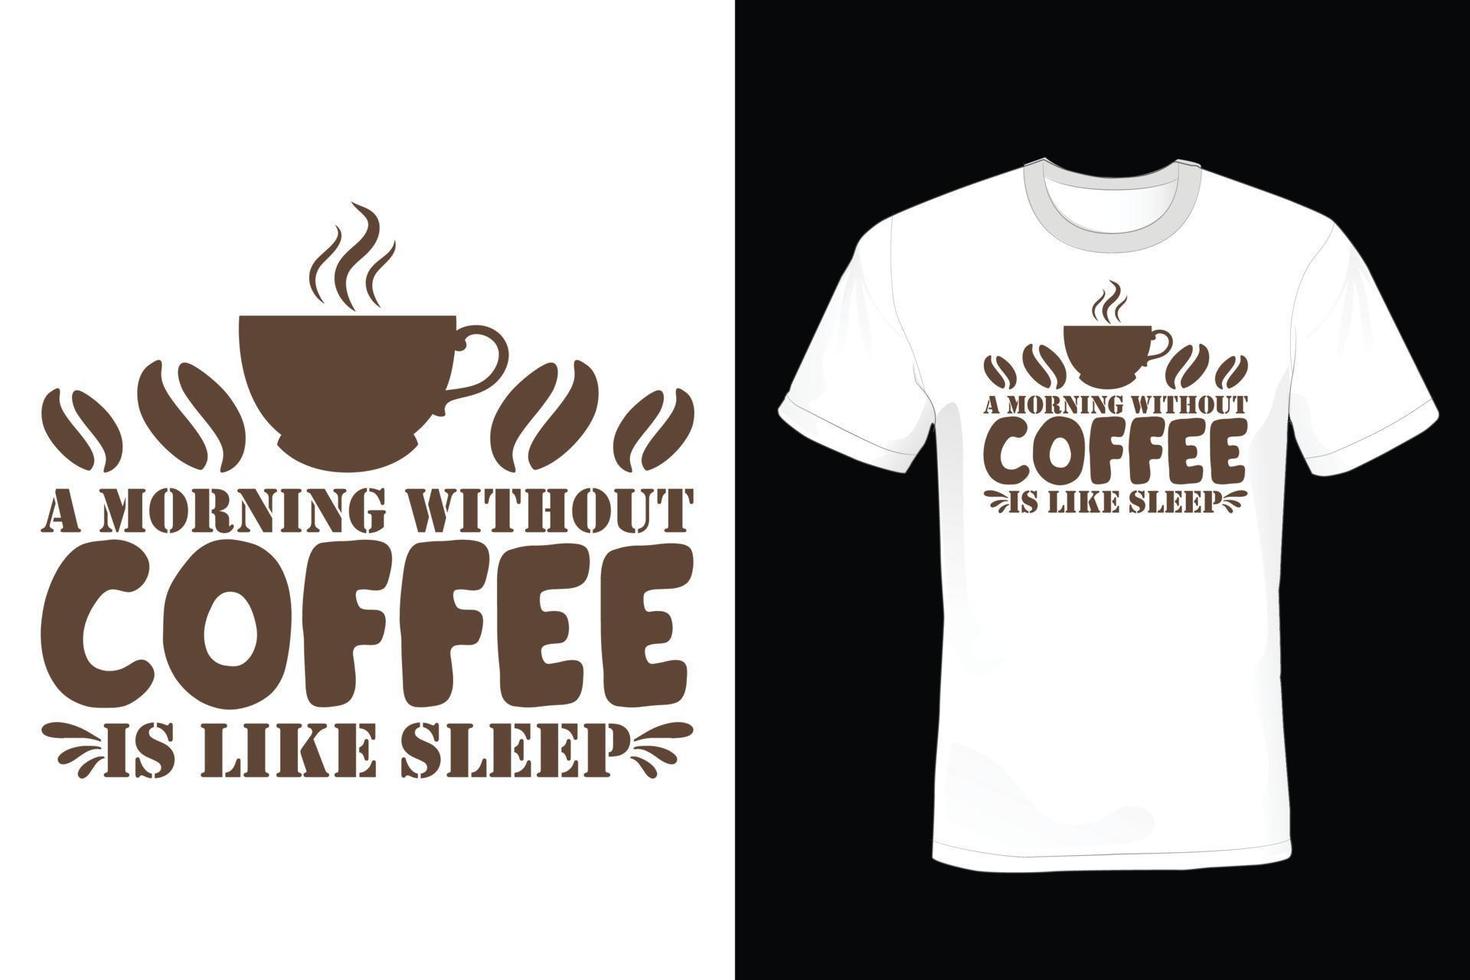 Kaffee-T-Shirt-Design, Vintage, Typografie vektor